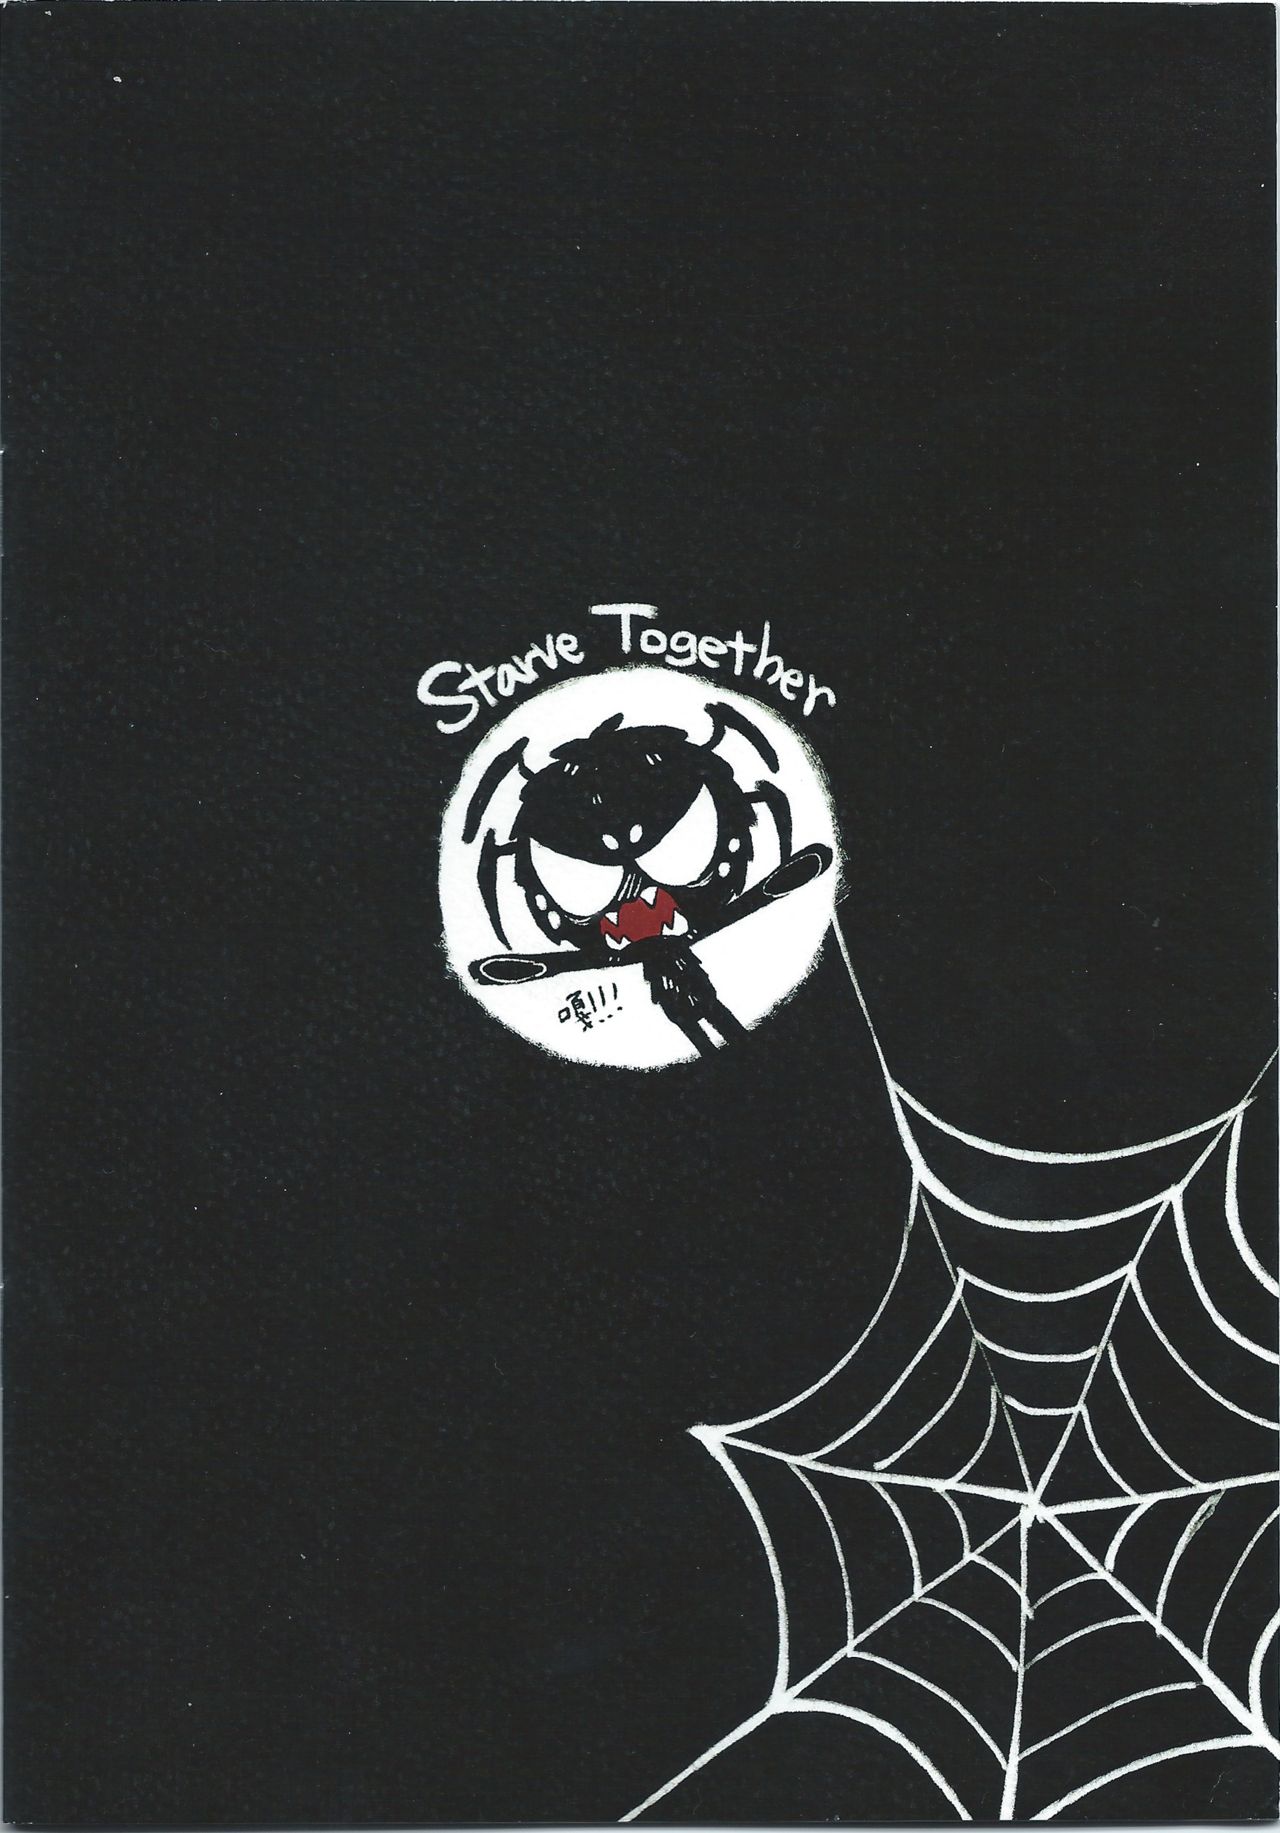 (Finish Prison) 蜘蛛絲採集教學 | "Spider Silk Collection" (Don't Starve) 